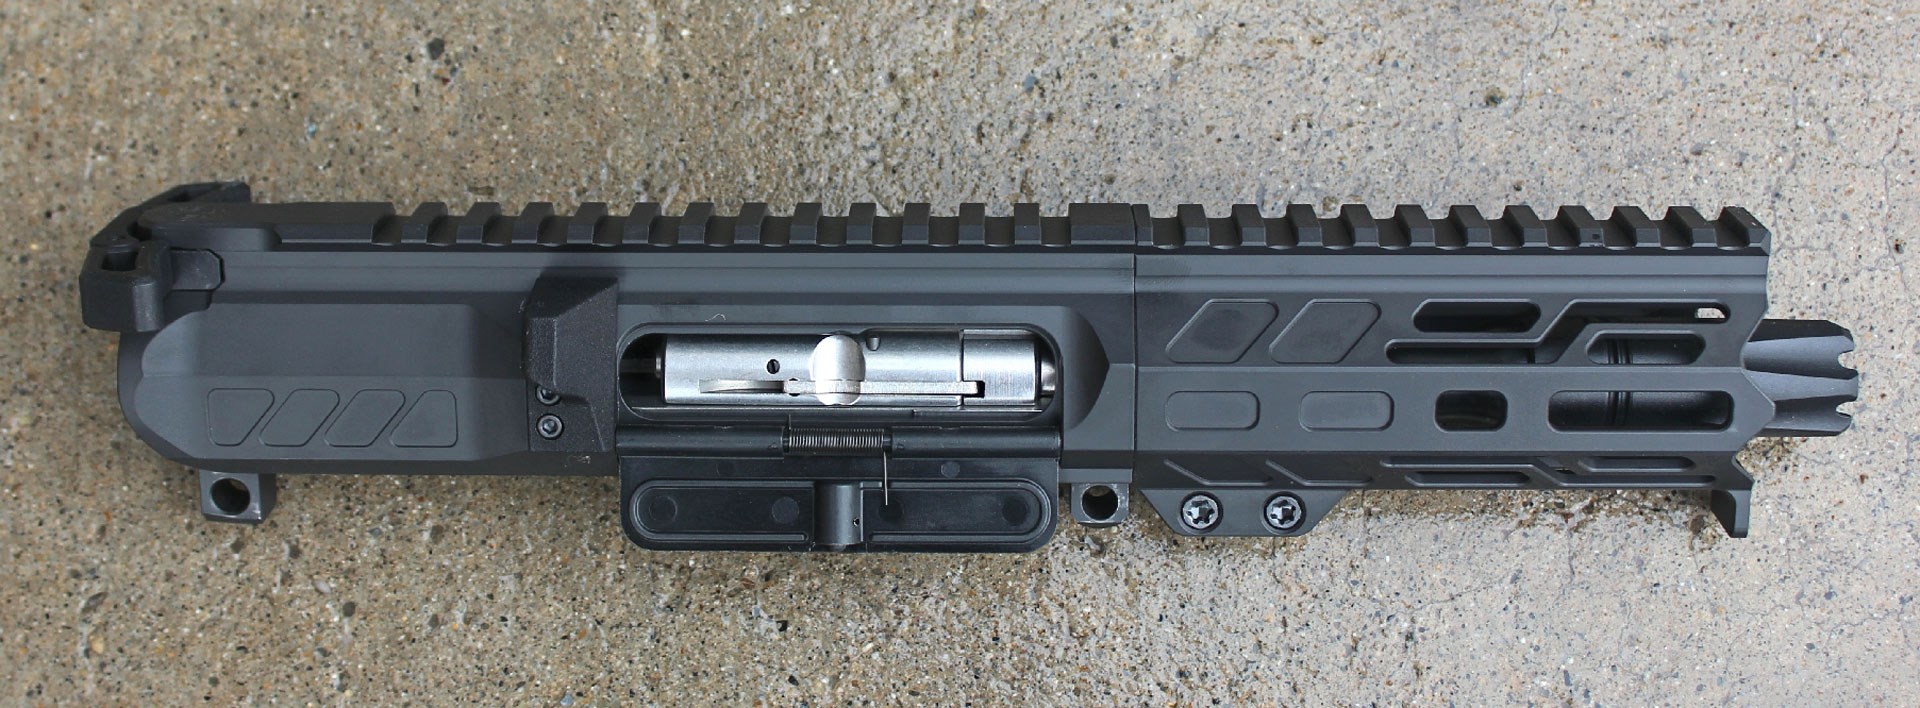 CMMG Mk4 Banshee .22 LR upper receiver gun parts short barrel handgun pistol parts